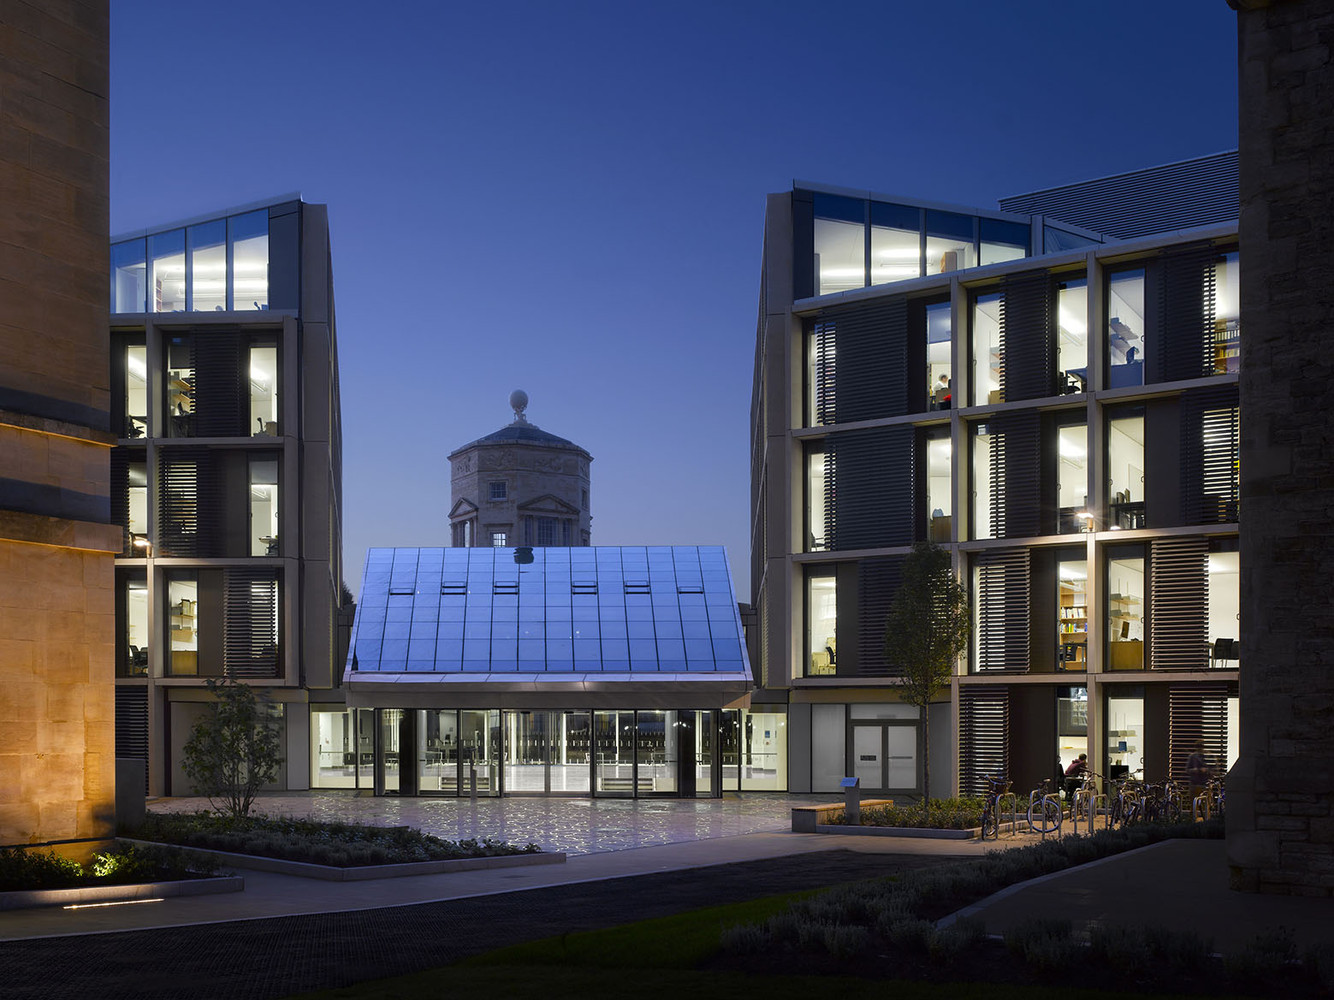 University of Oxford Mathematical Institute  Rafael Viñoly Architects-47